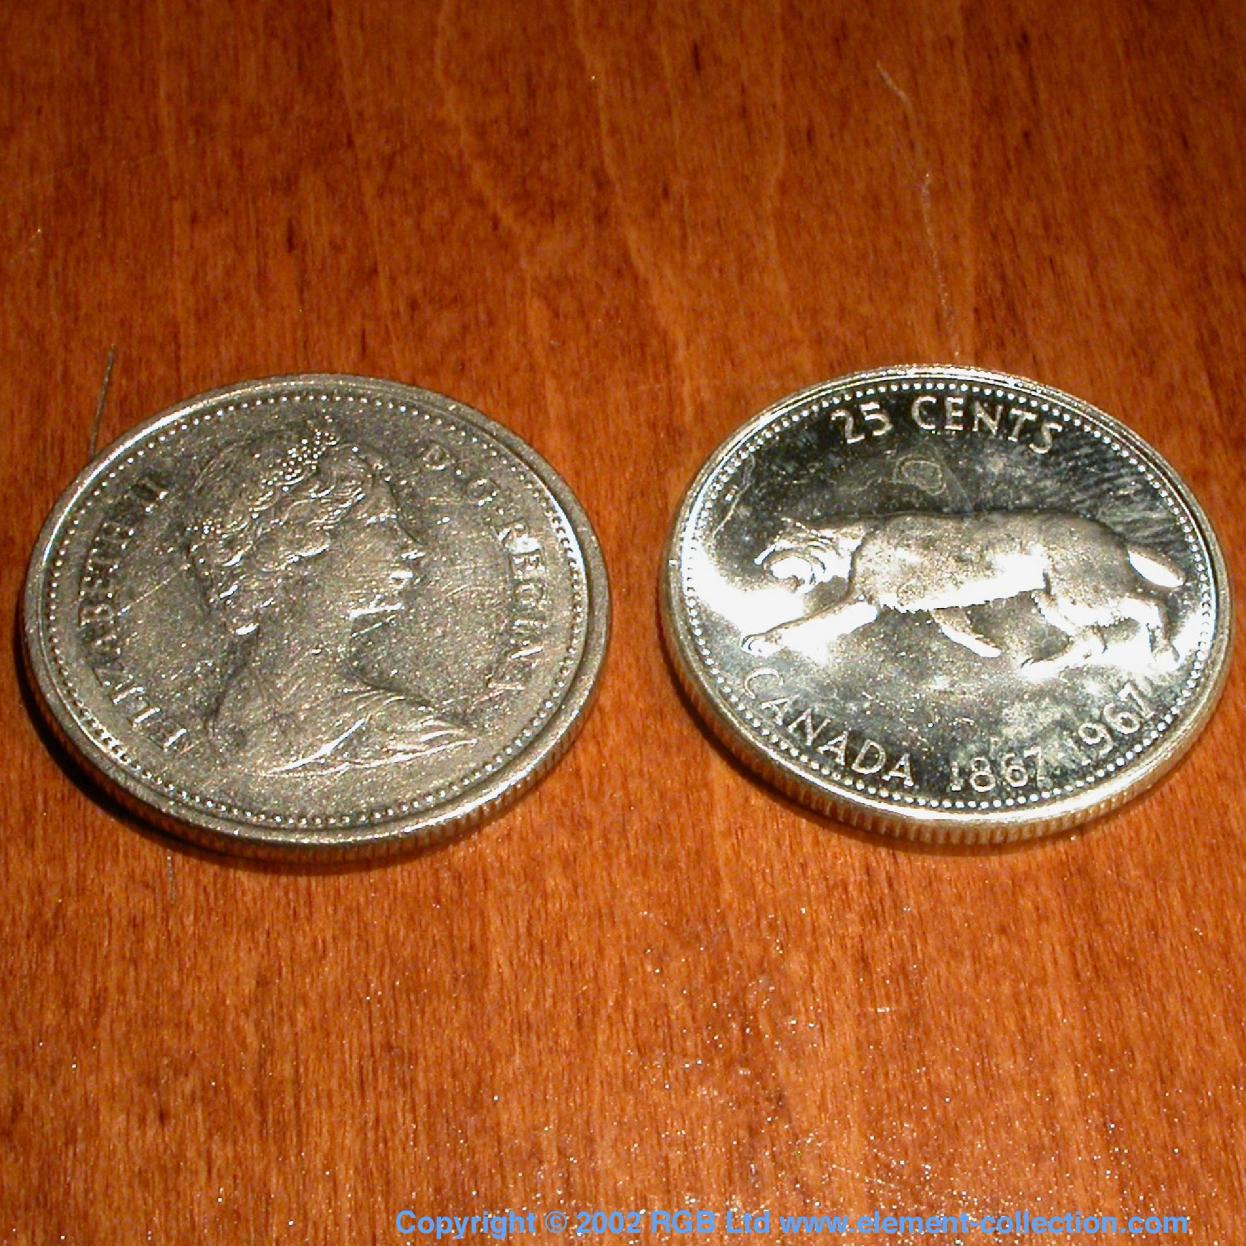 Nickel Canadian quarters